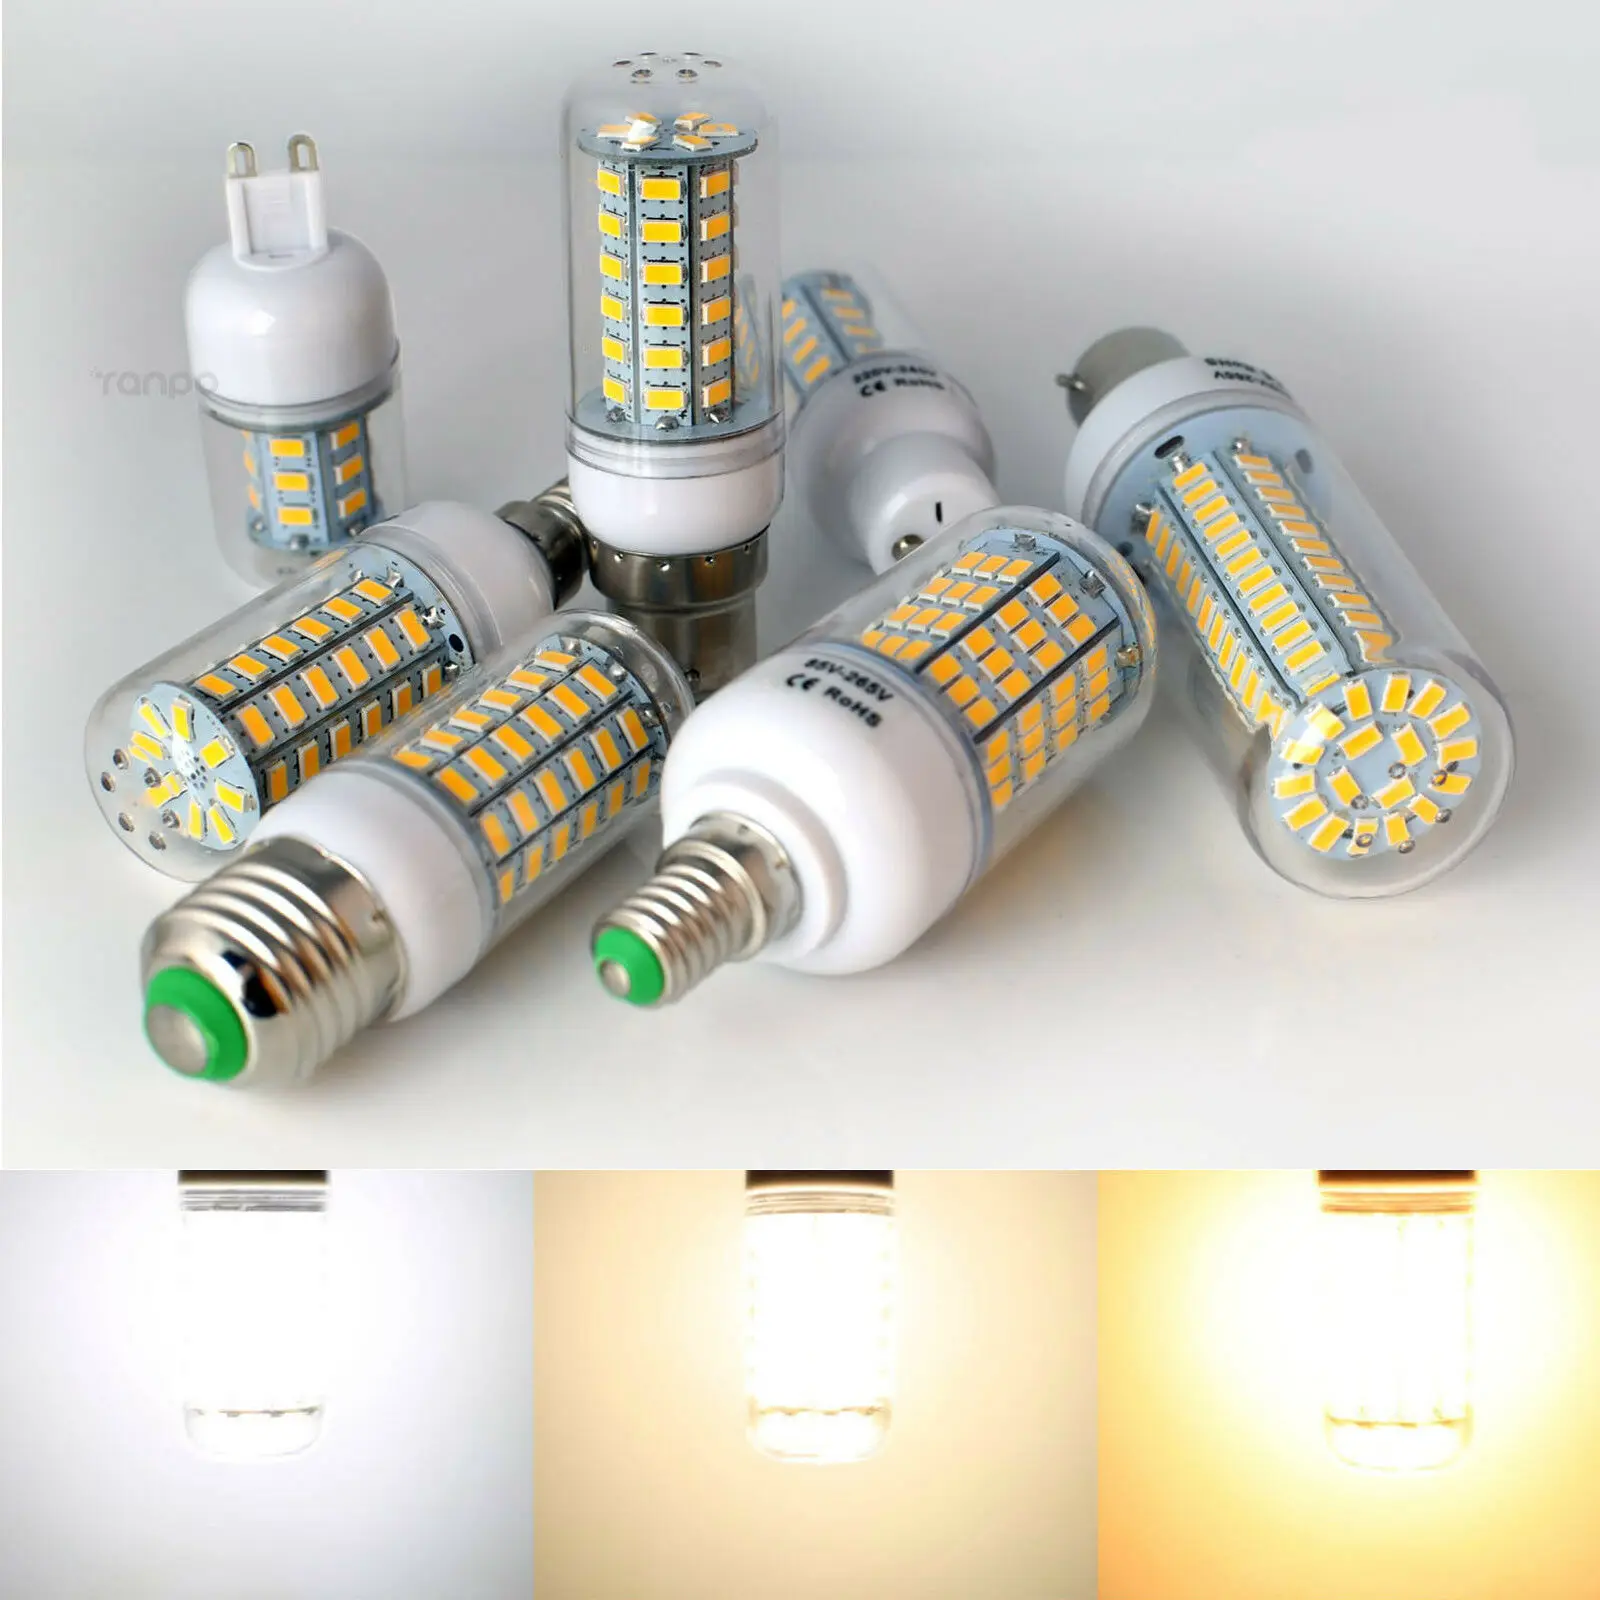 7W-25W LED Corn Light Bulbs E27 E14 B22 G9 GU10 Screw Bayonet Base 24/36/48/56/69/108 LED Chips Bright White Lampada 220V 230V